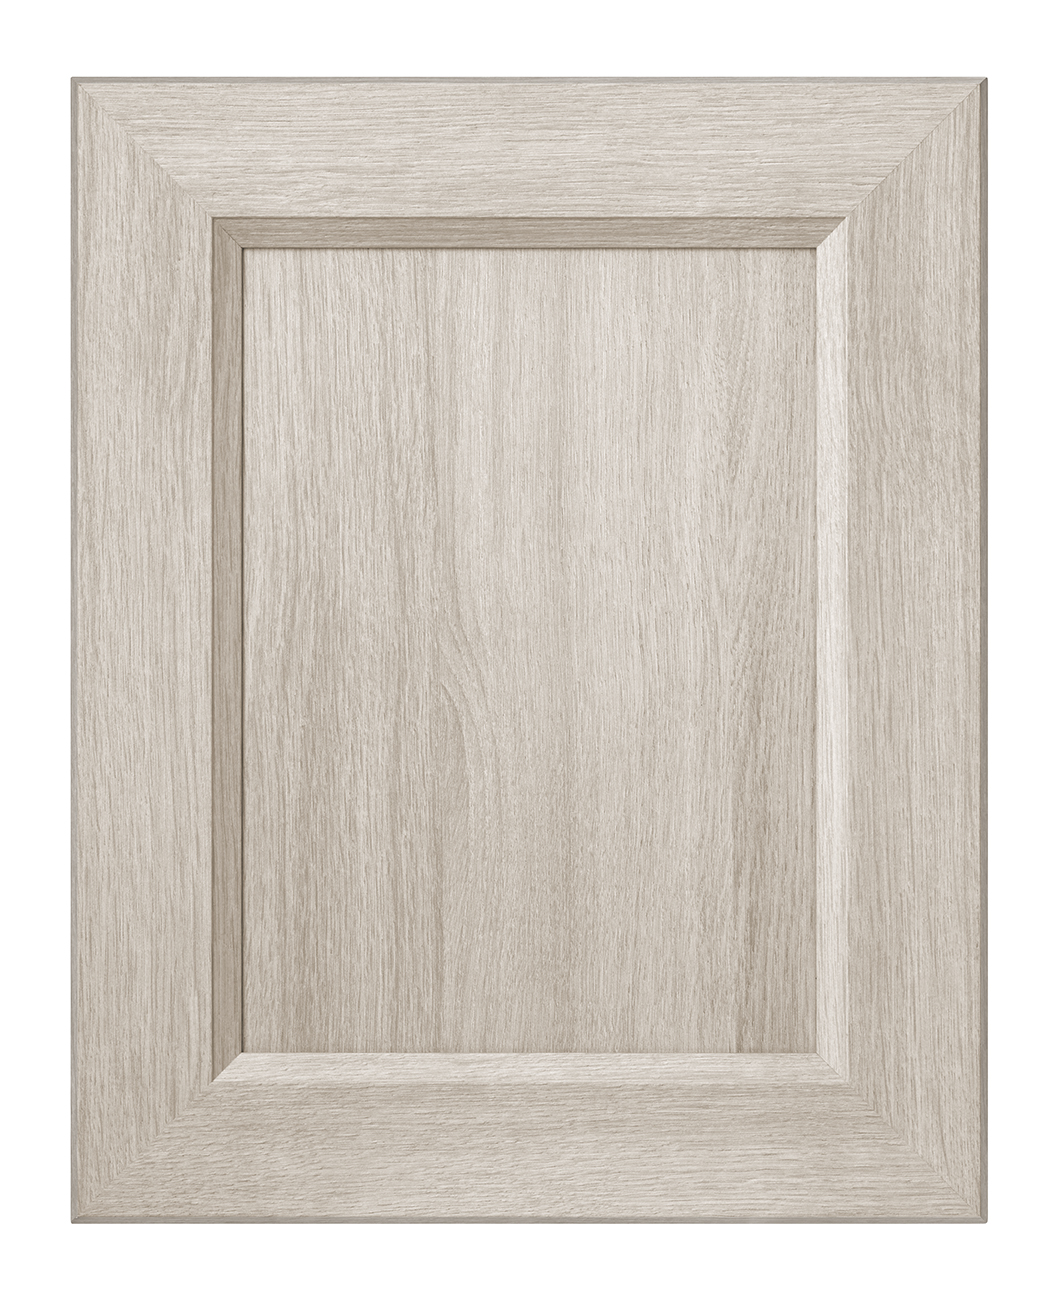 Beta shaker cabinet door in Tafisa K580 Free Spirit